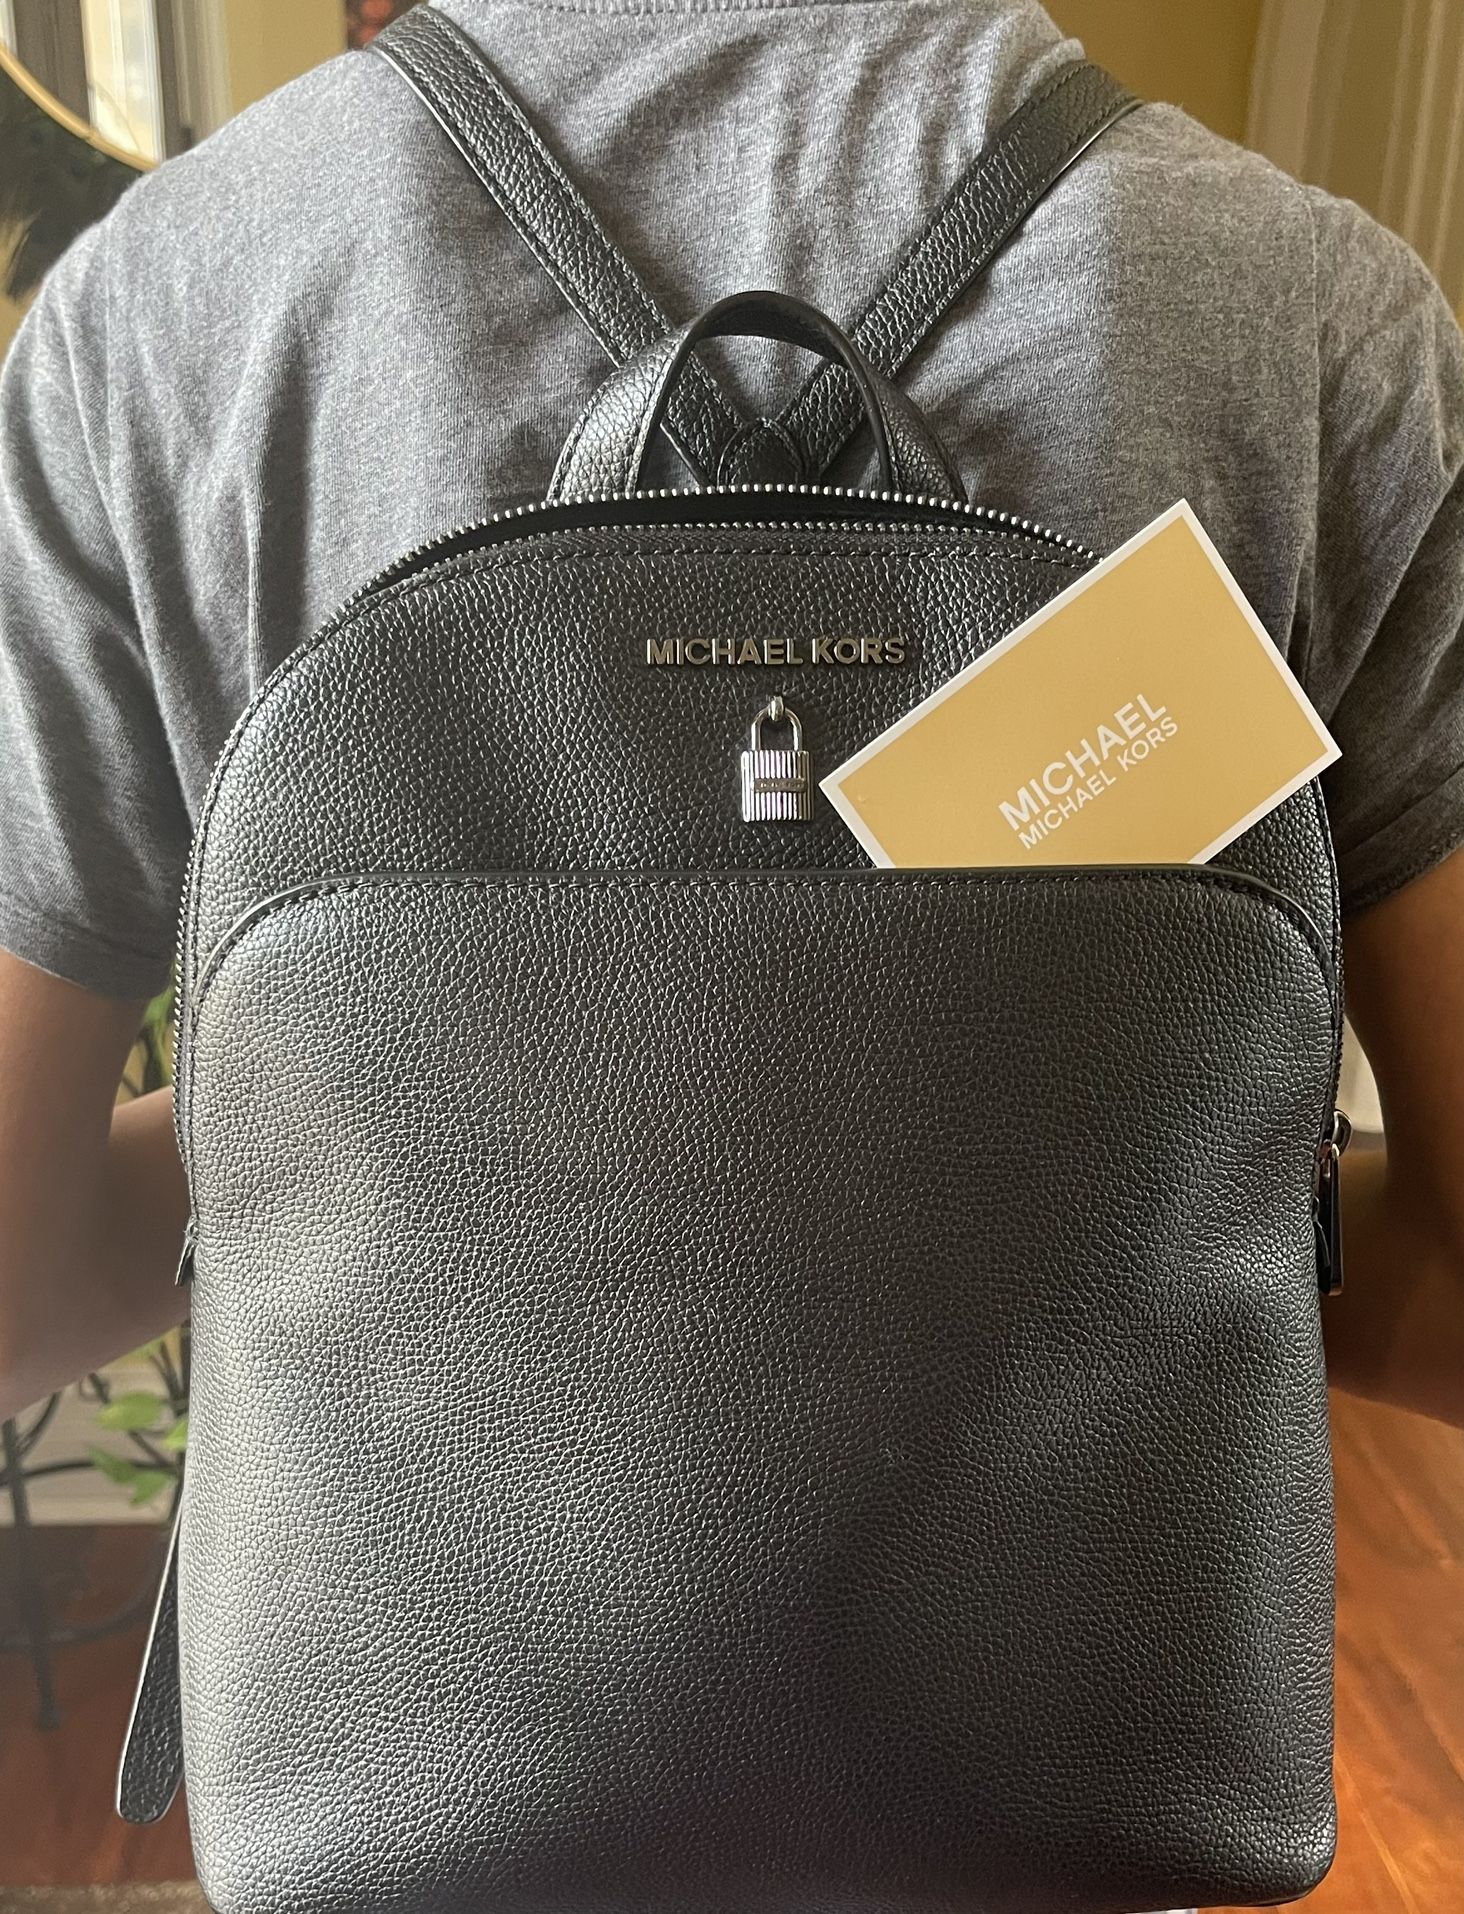 Michael Kors Leather Backpack Handbag